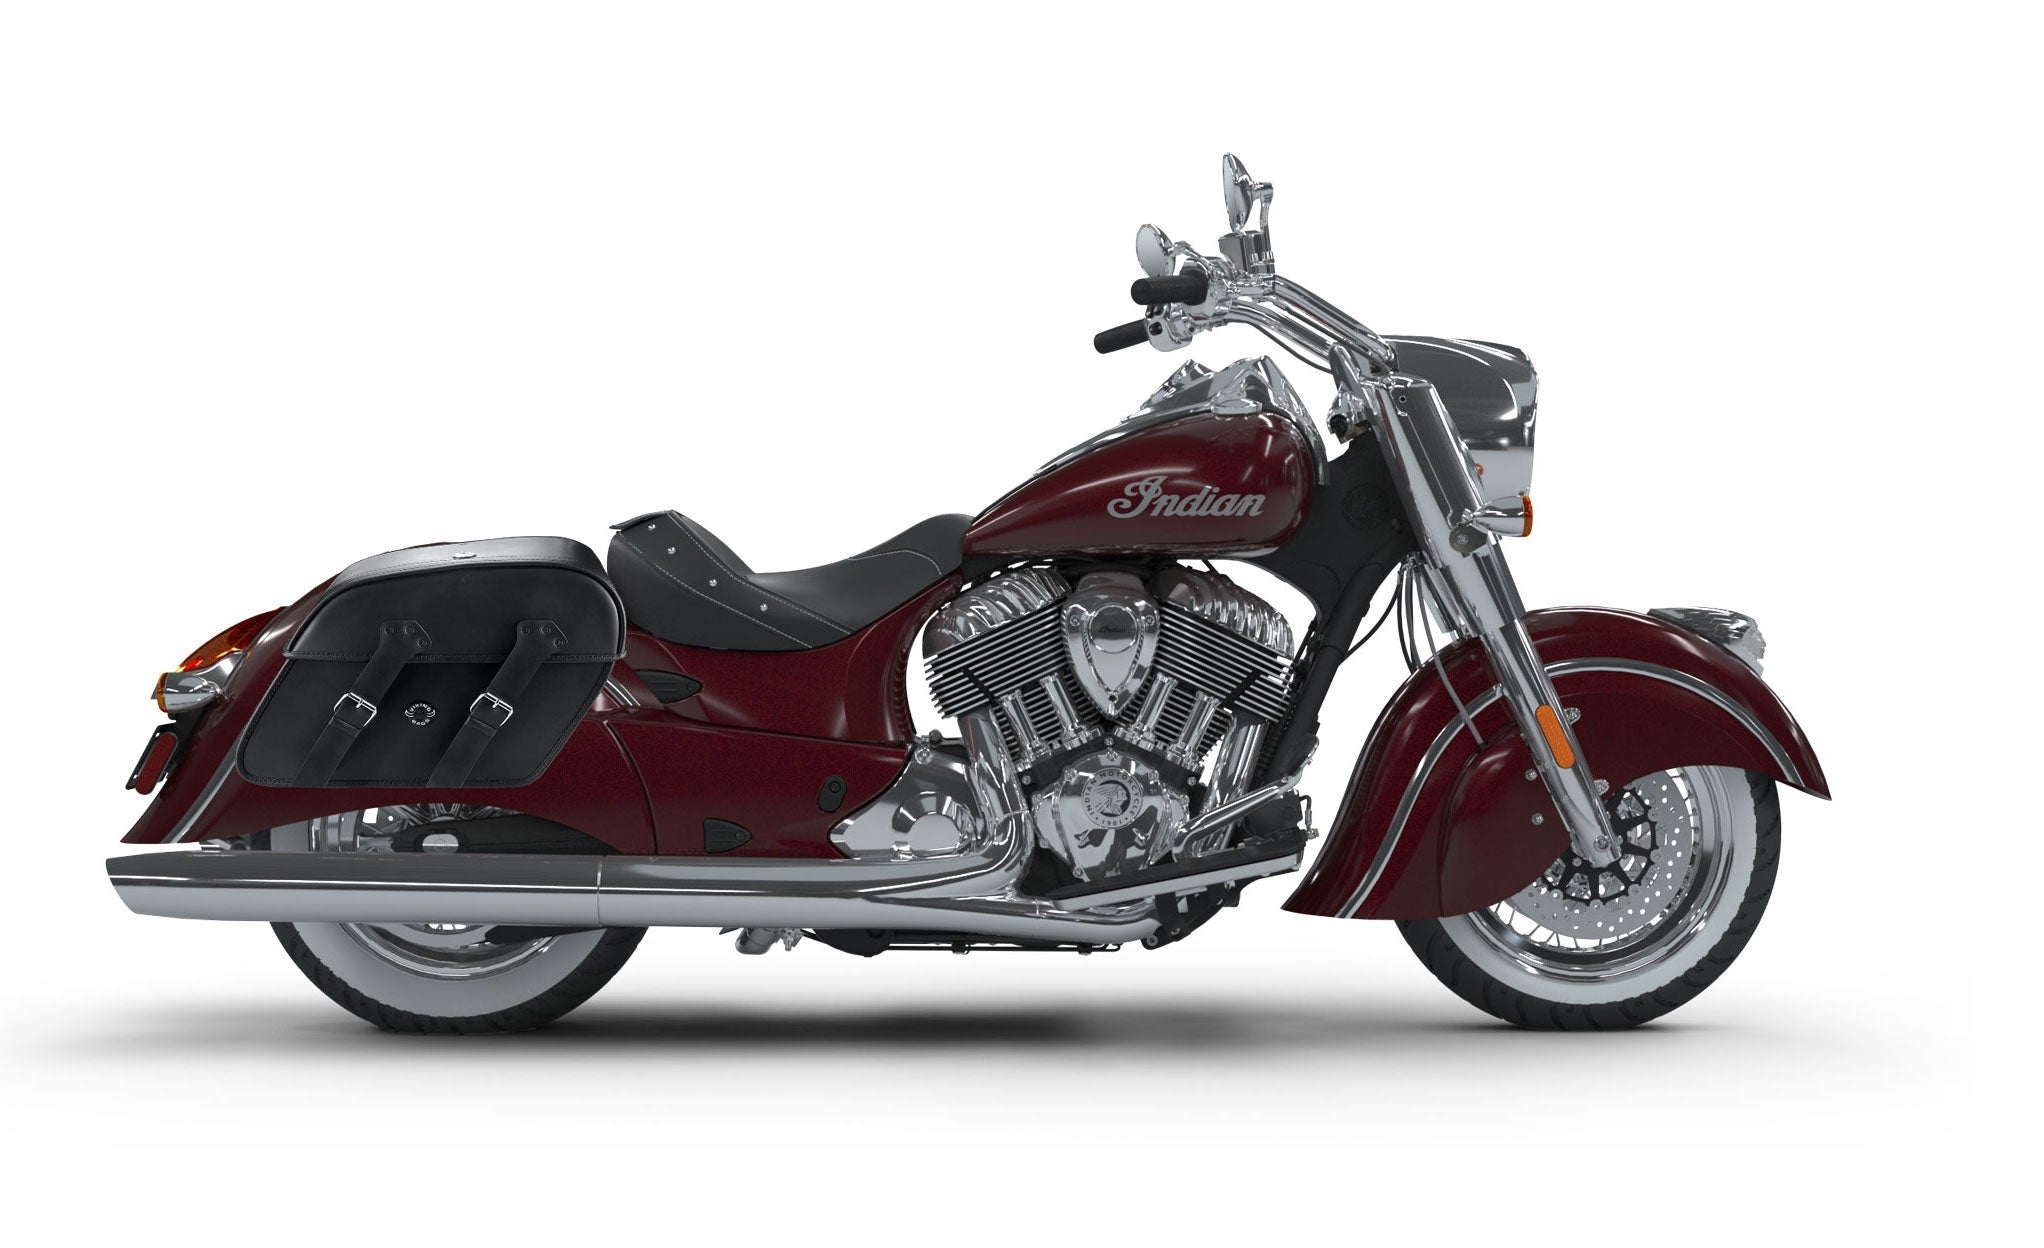 Viking Raven Extra Large Indian Chief Classic Leather Motorcycle Saddlebags on Bike Photo @expand